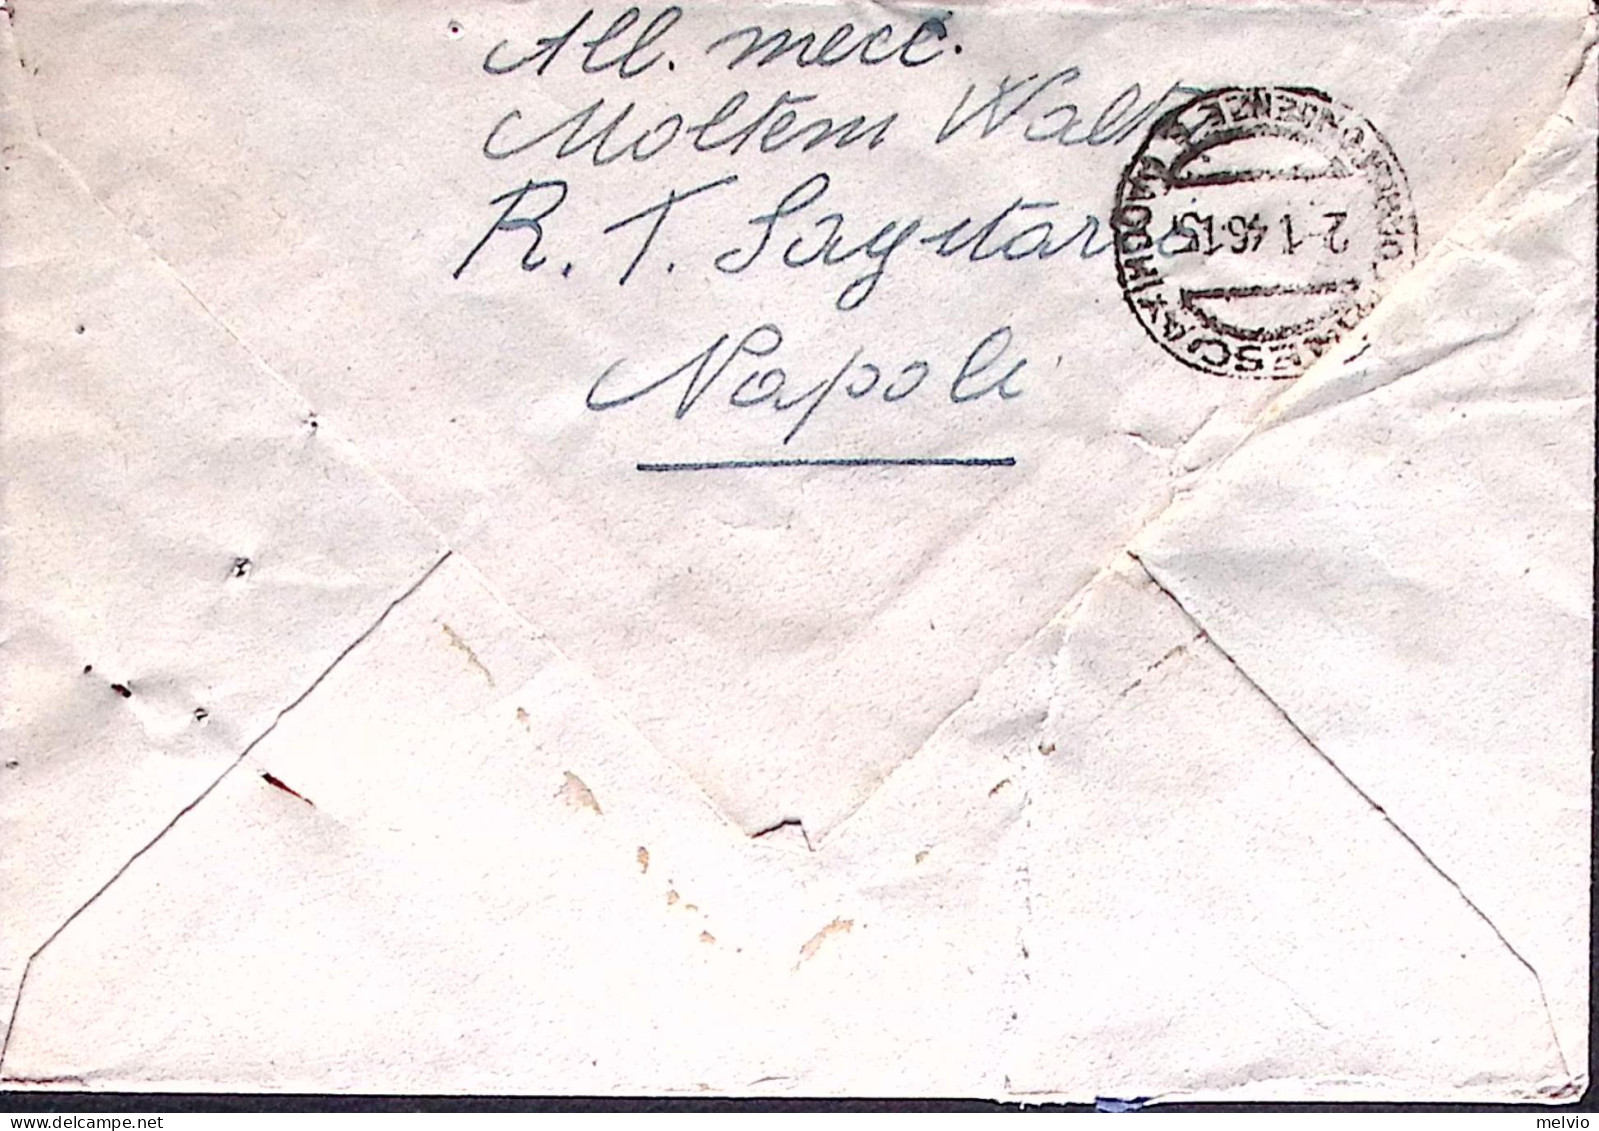 1945-R. Torpediniera Sagittario Ovale Su Busta Affrancata Monumenti Sopr.lire 2/ - Marcophilie